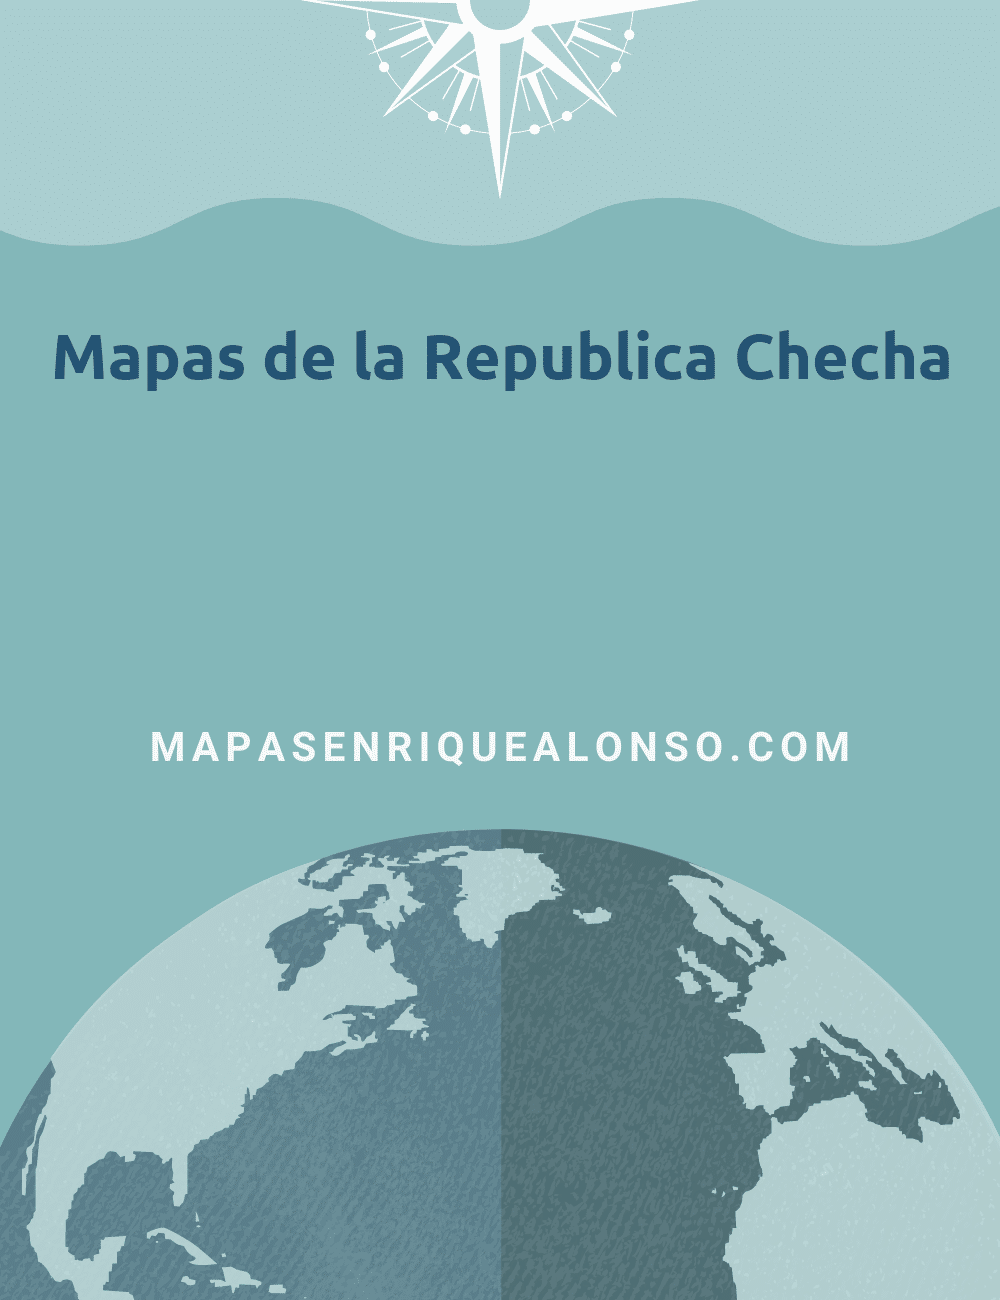 Mapas de la Republica Checha